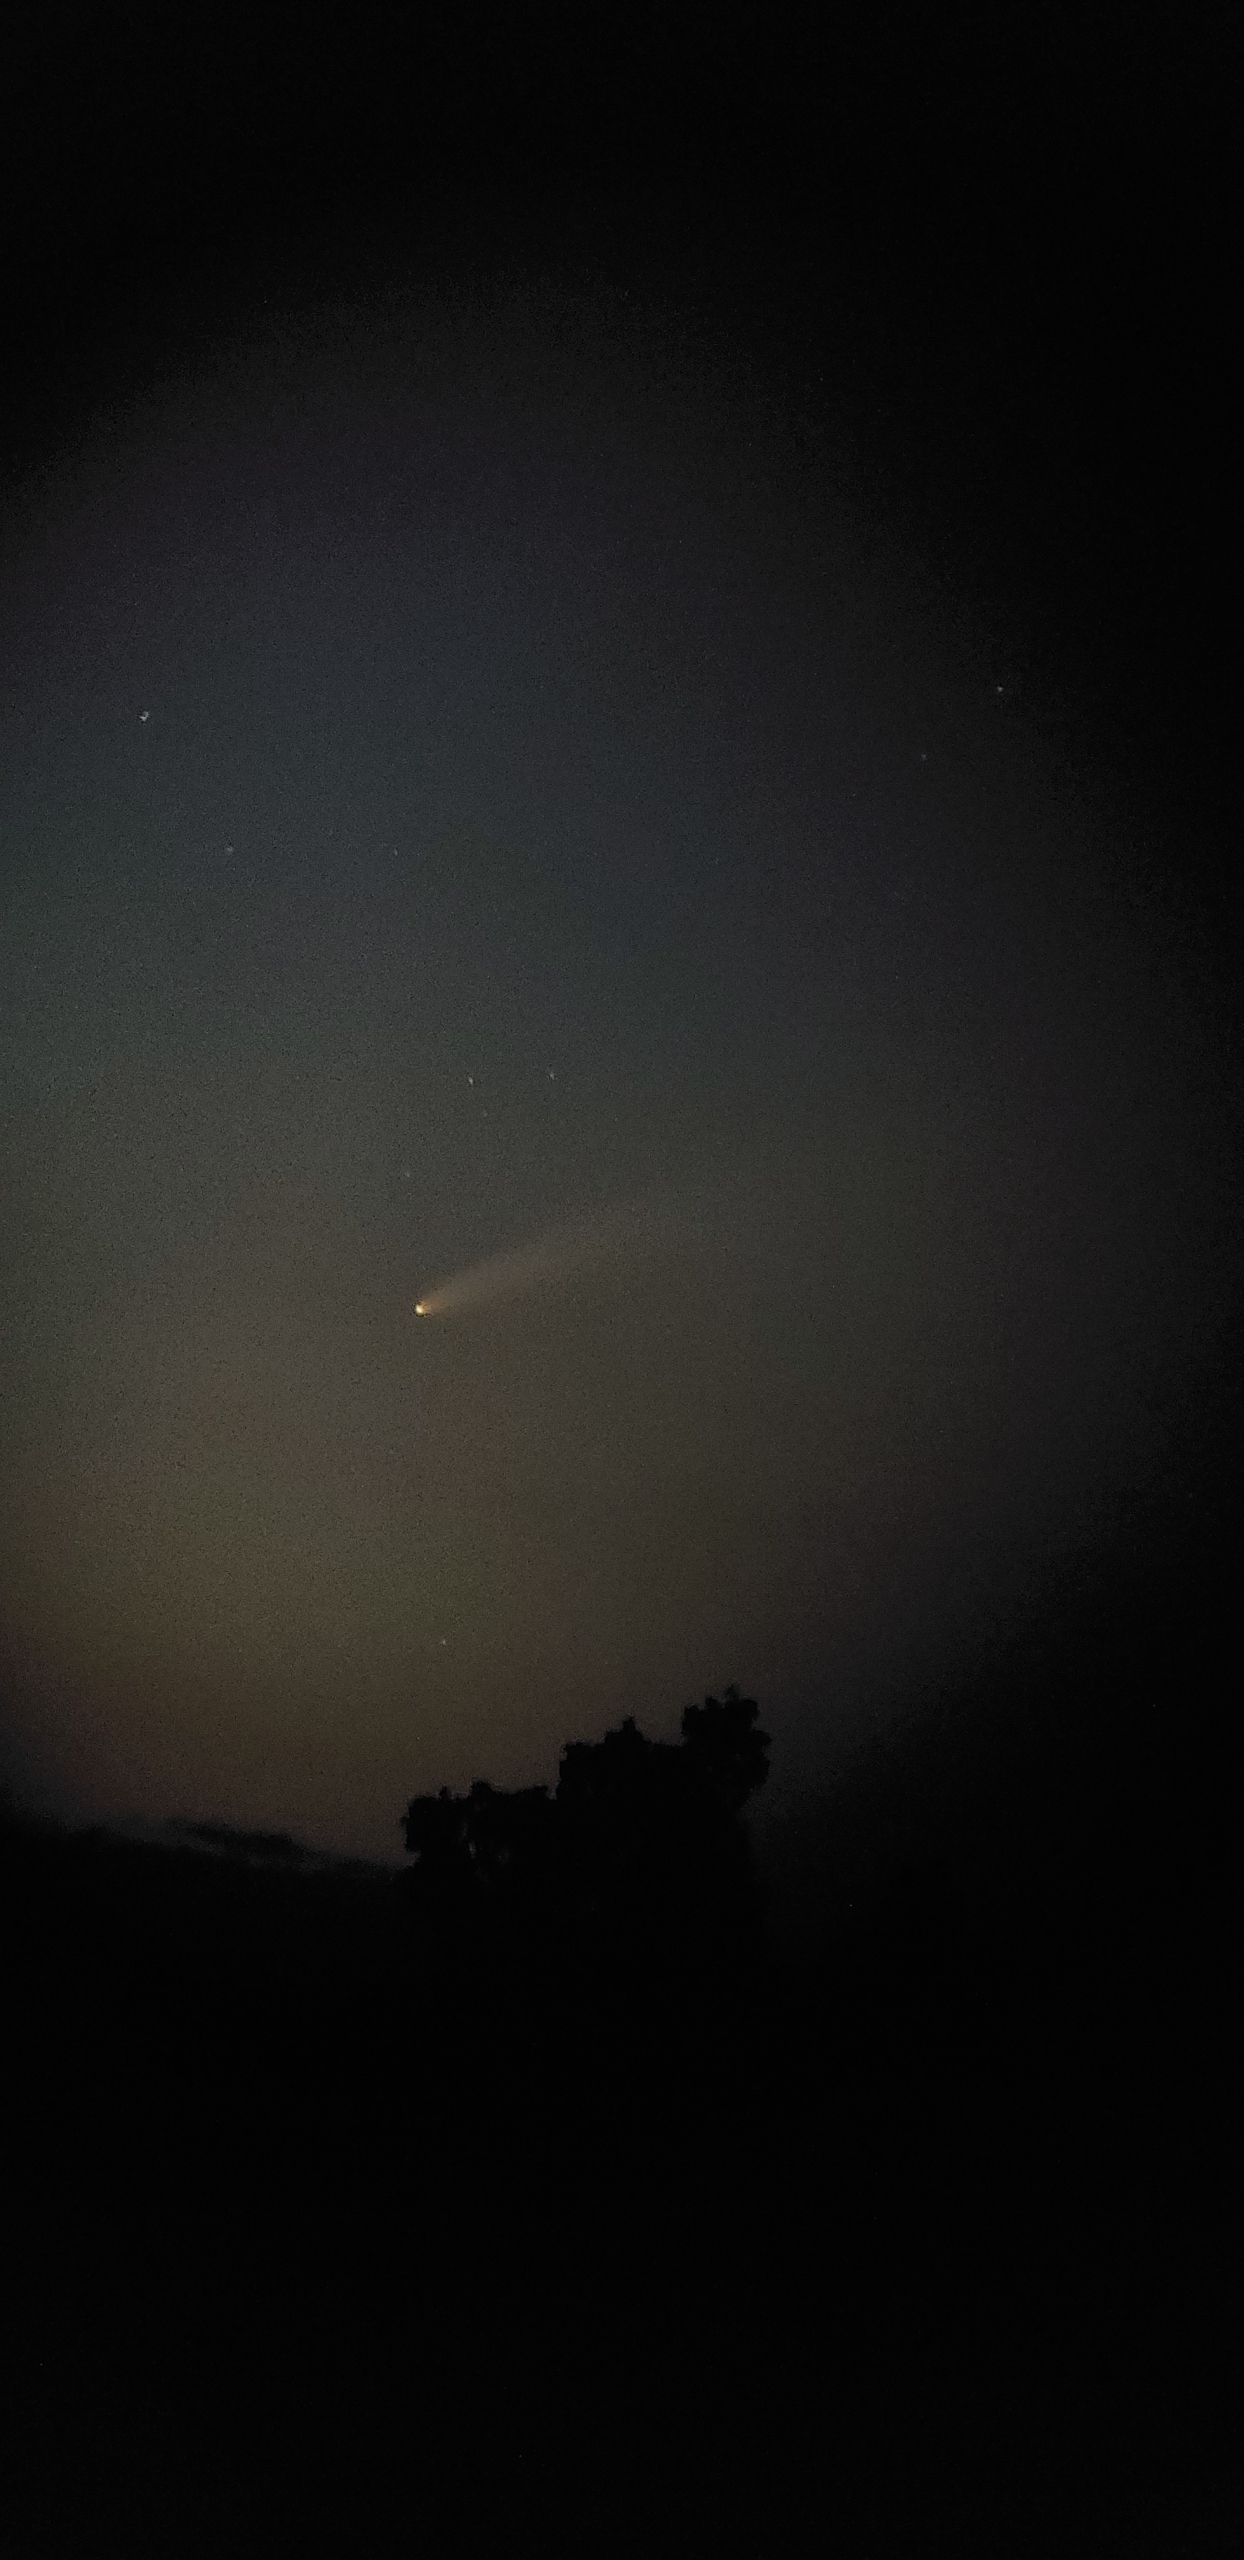 Jose Manuel Batista Comet NEOWISE